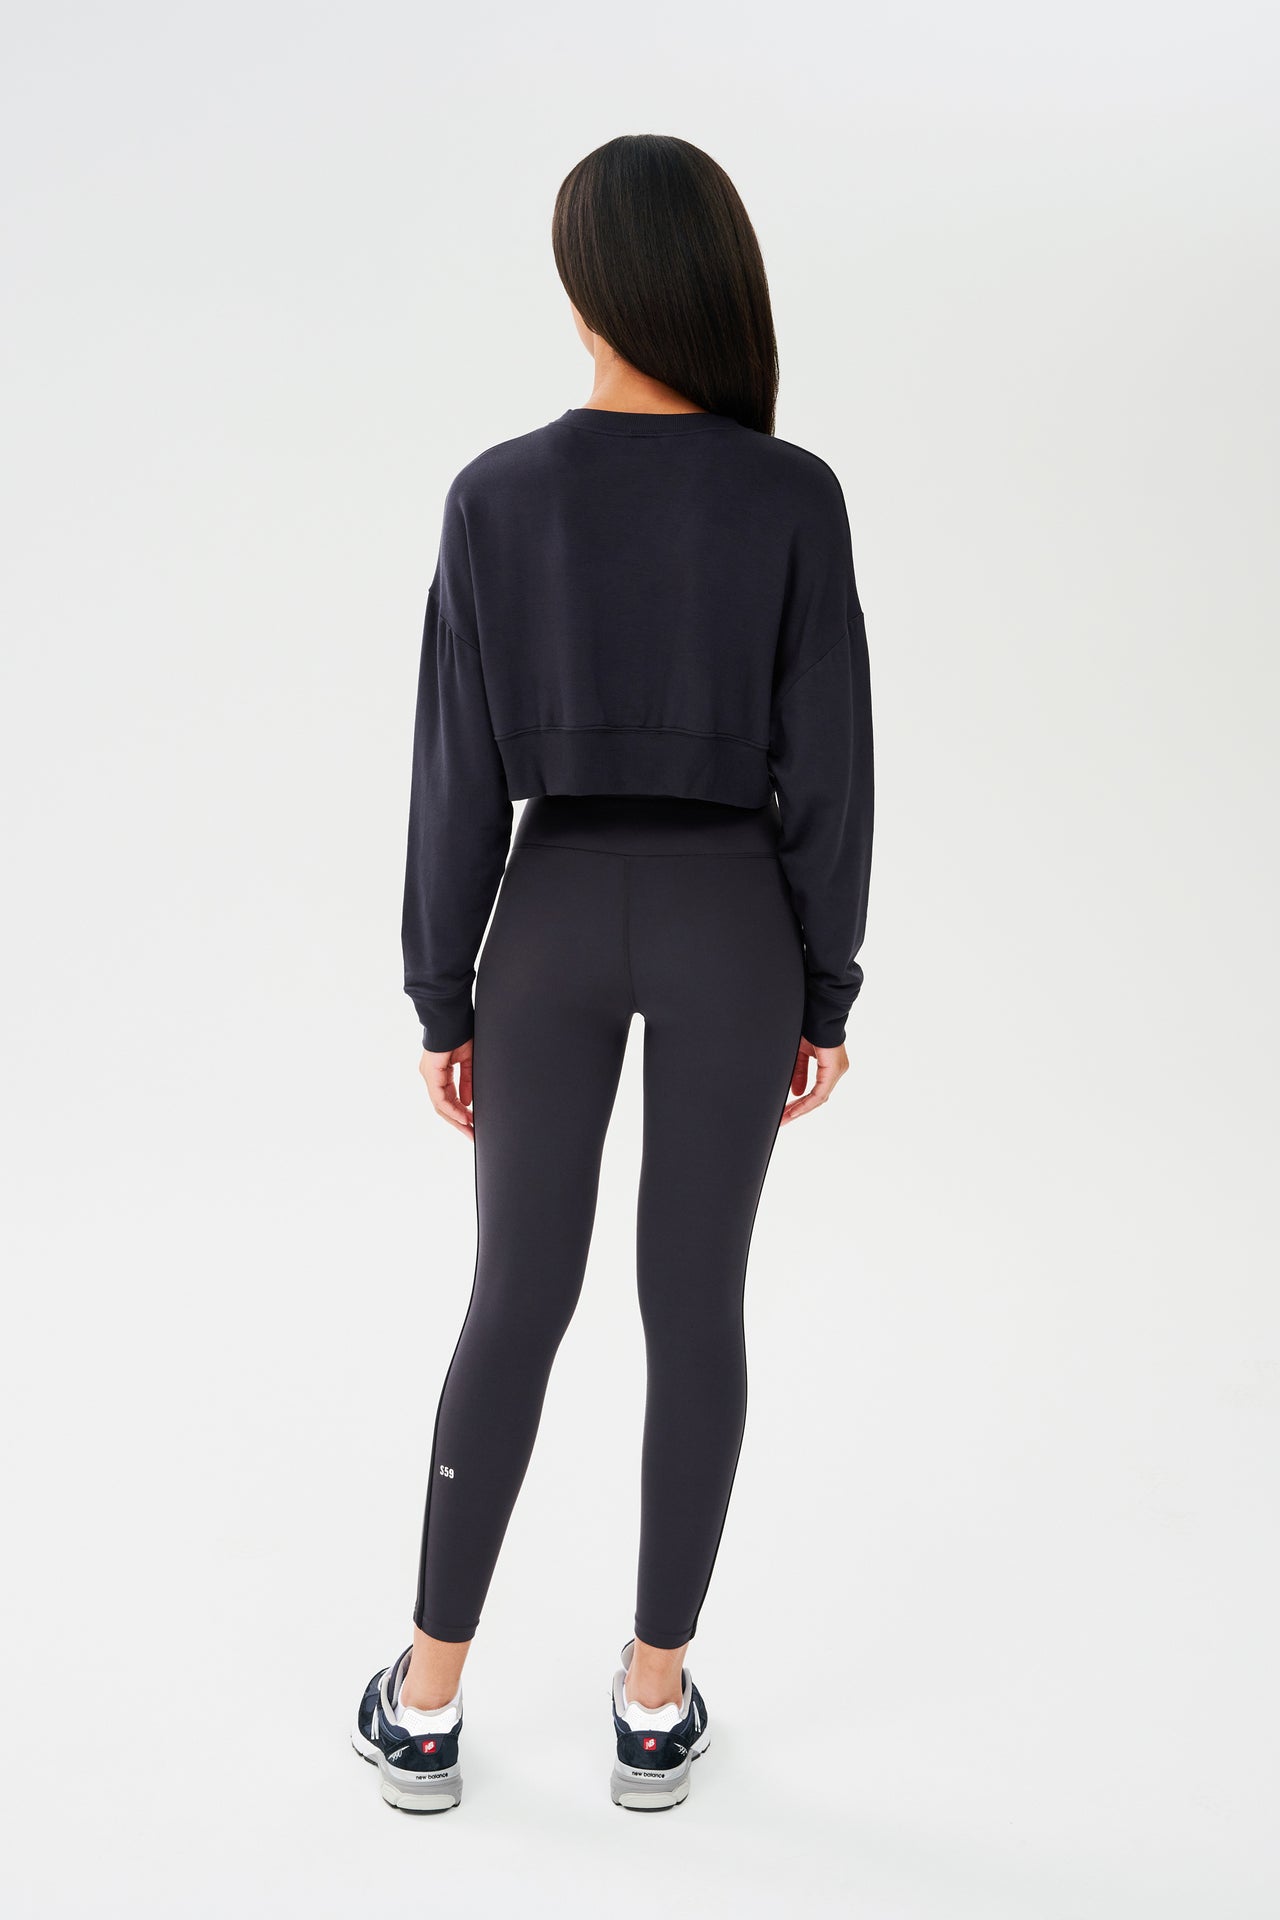 The back view of a woman wearing an athletic SPLITS59 Noah Fleece Crop Sweatshirt in Graphite and leggings.